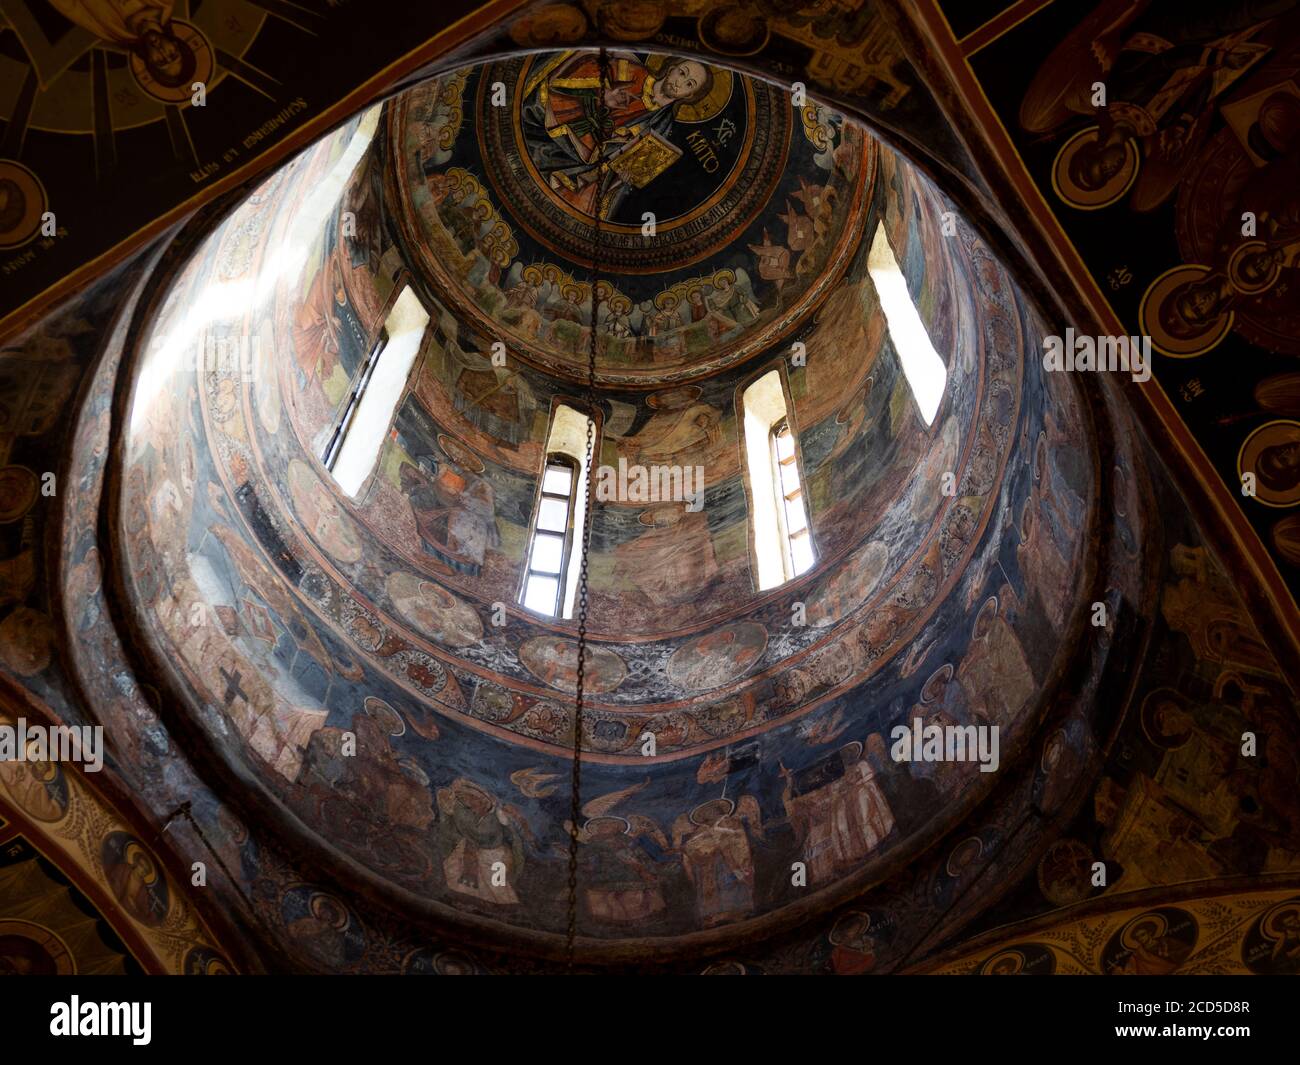 Interior of Biserica Veche (Old Church) built by Prince Mihial Cantacuzino, Sinaia, Transylvania, Romania Stock Photo